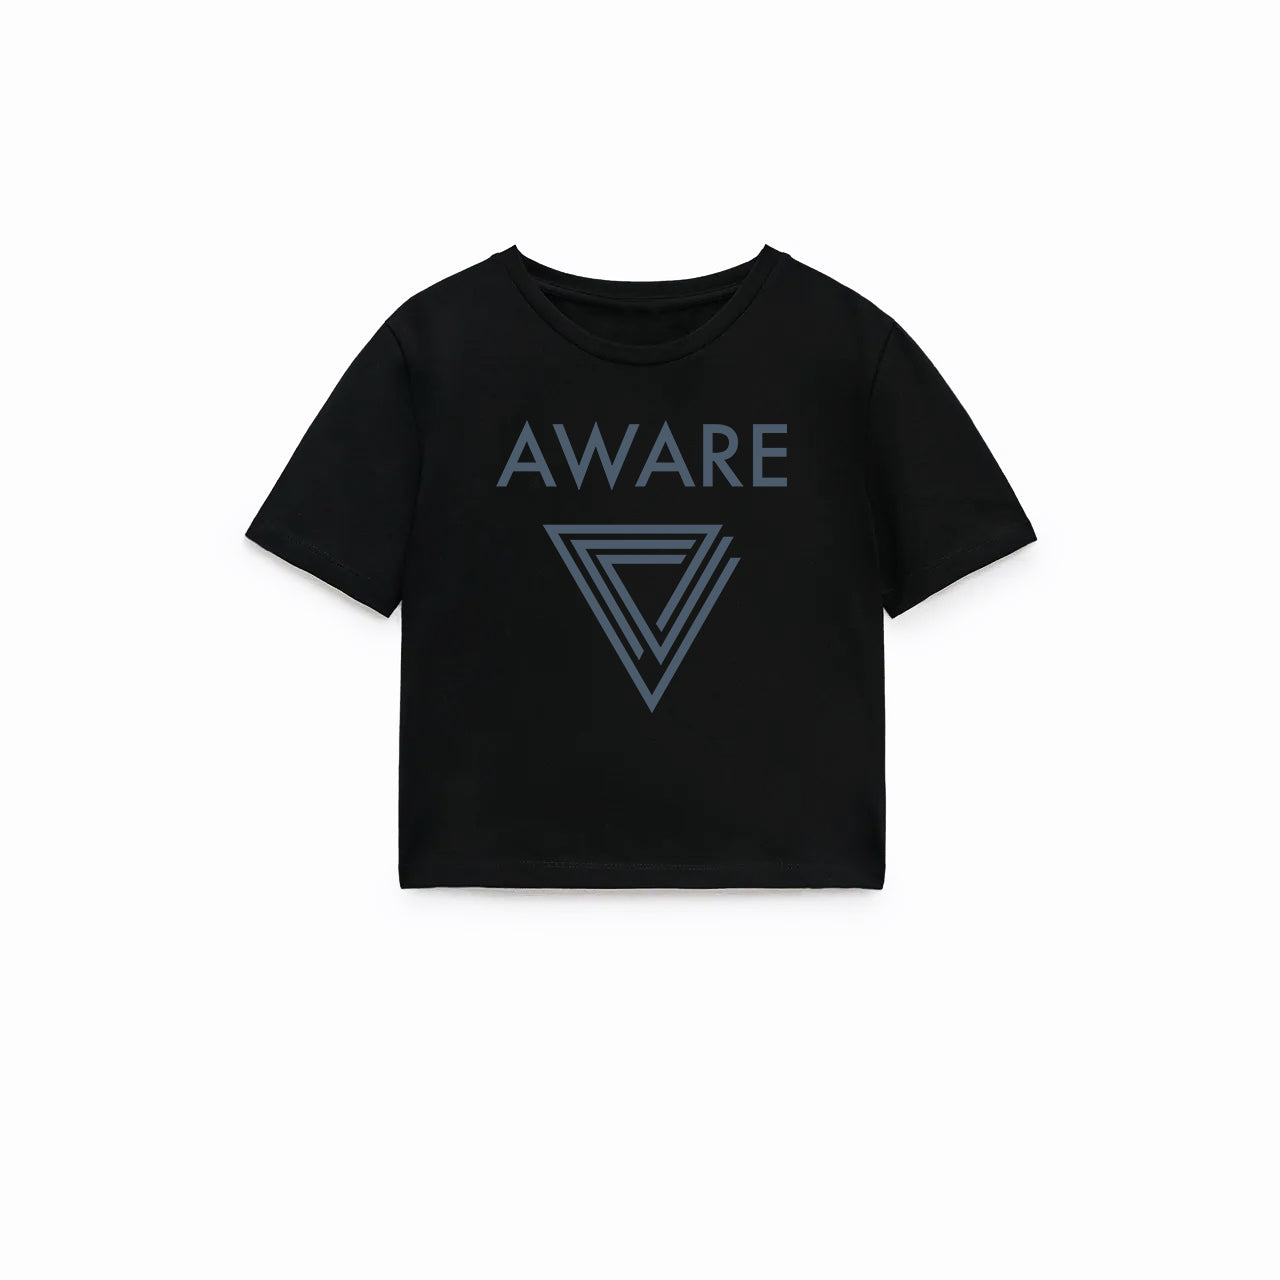 Grey AWARE Infinite Triangle Crop Top T-Shirt